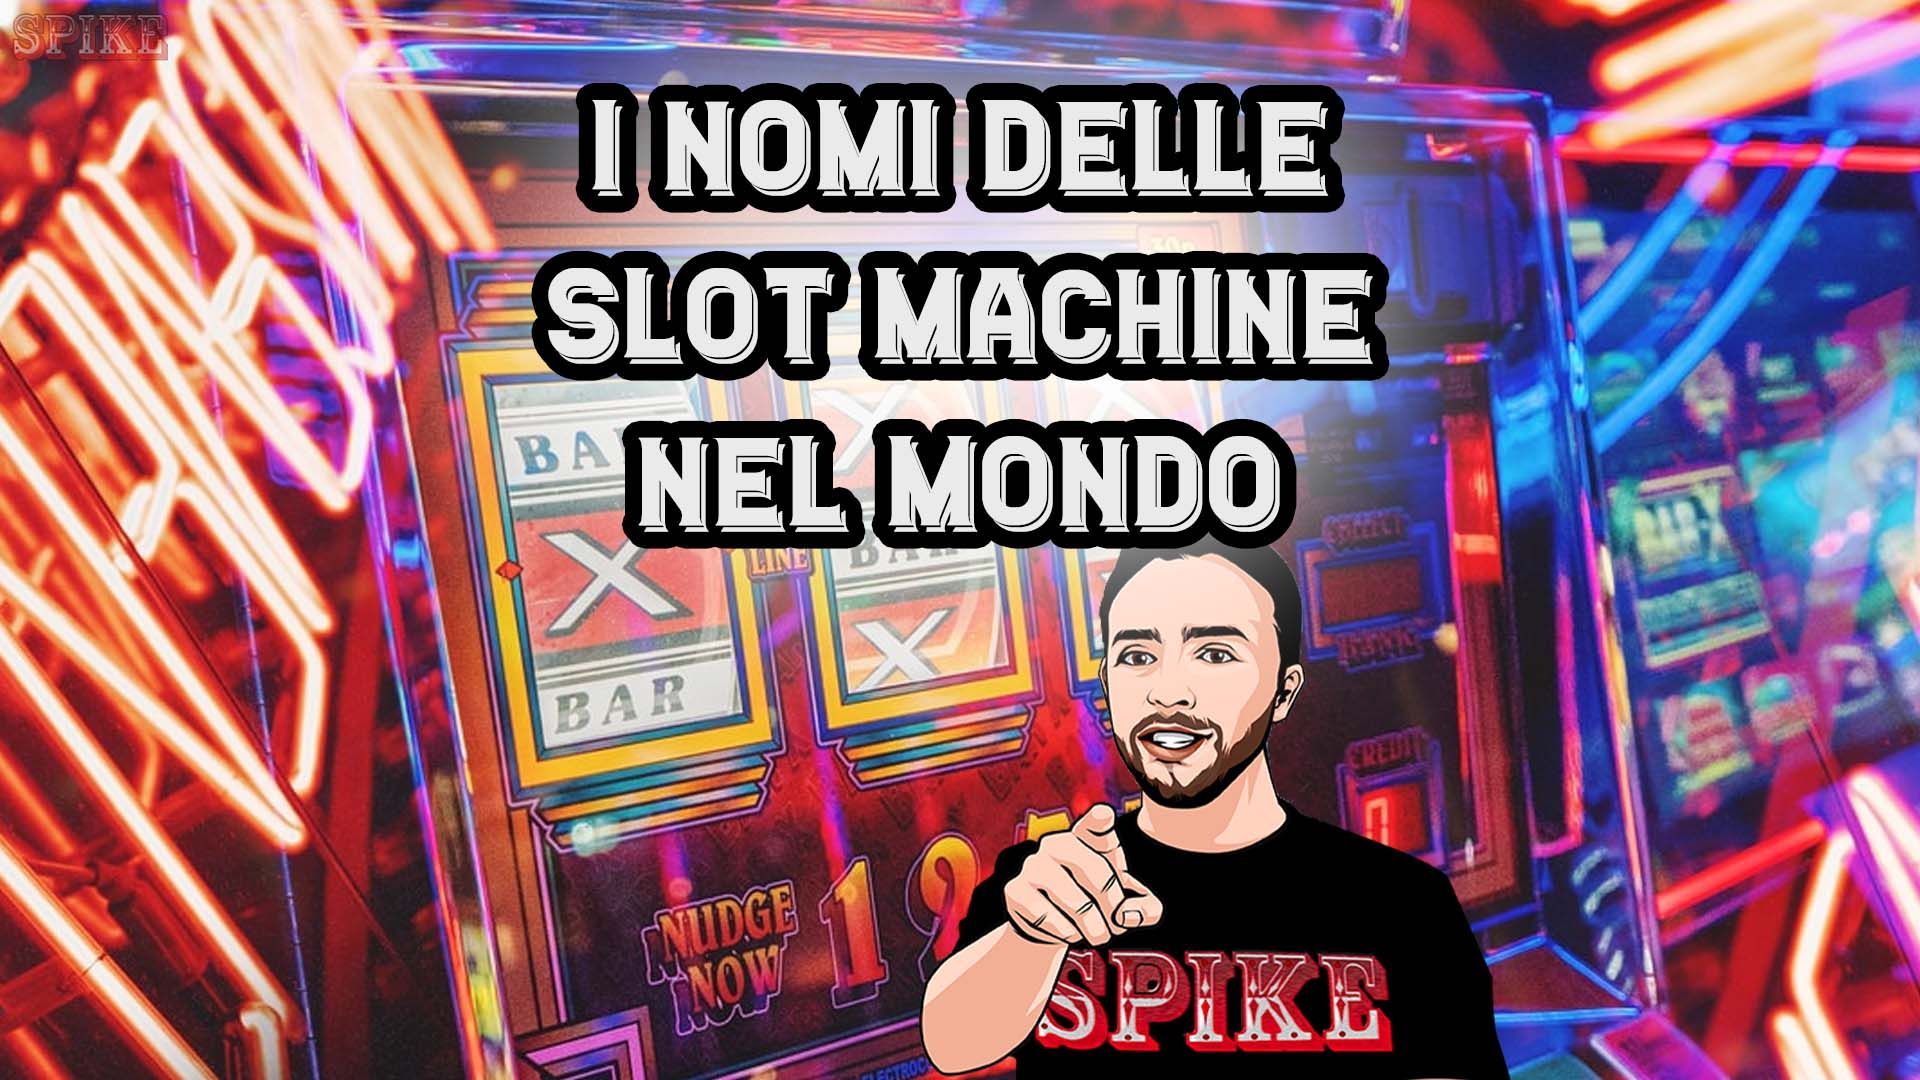 Nomi Delle Slot Machine